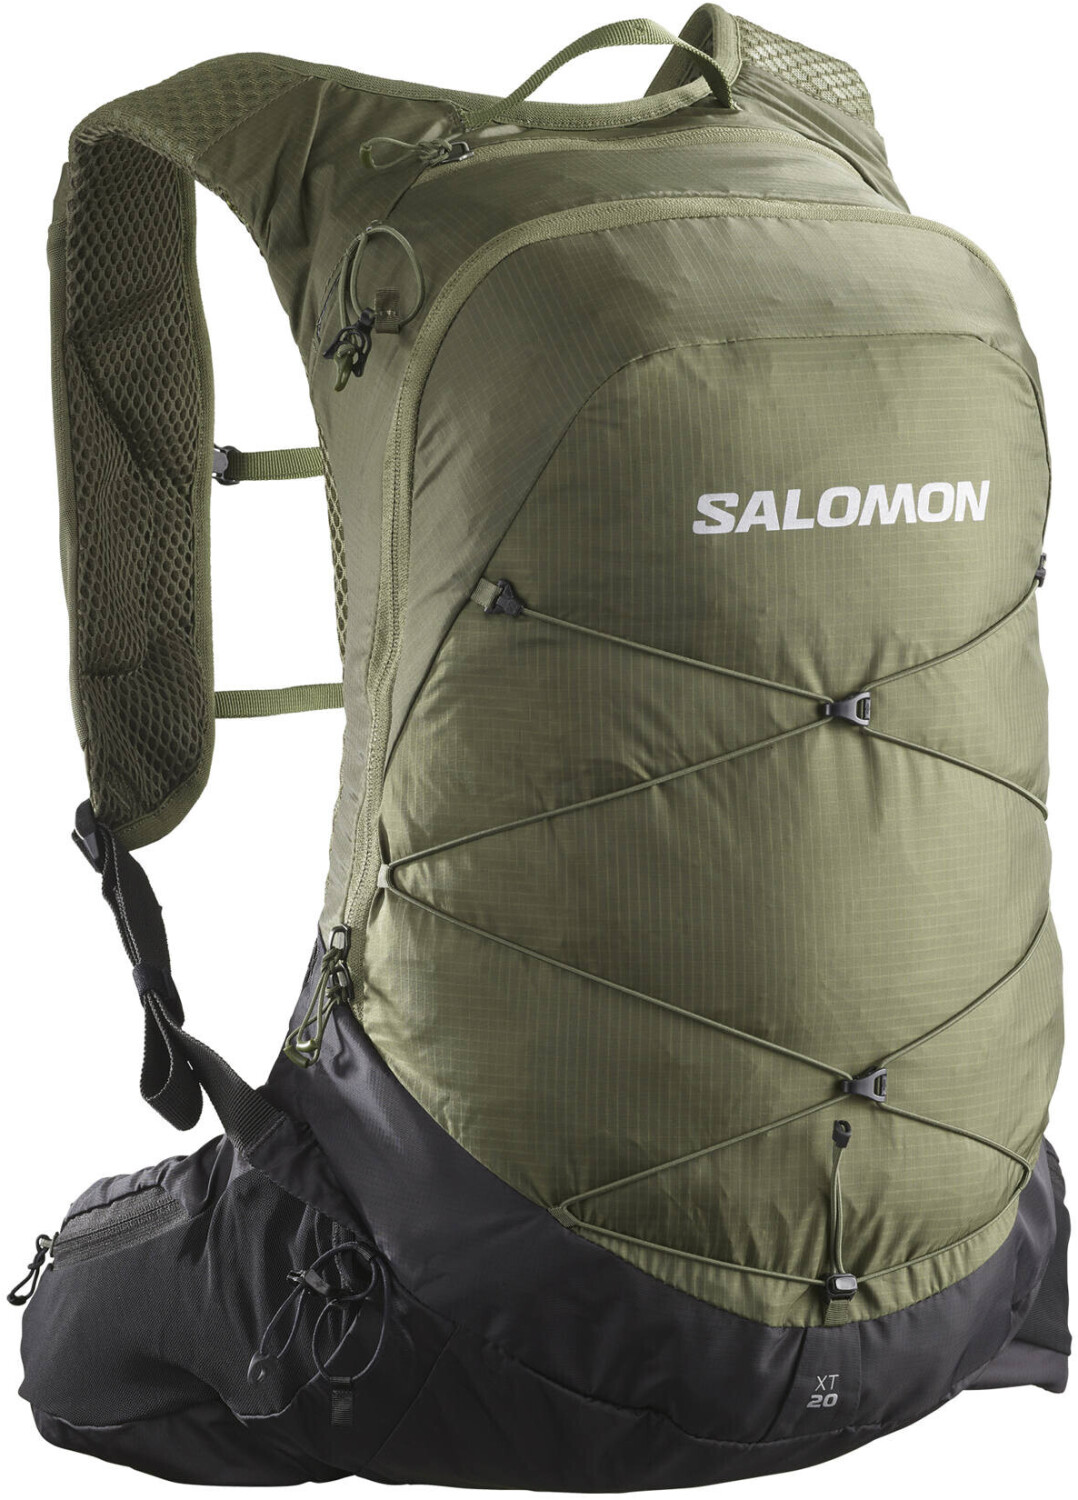 Salomon Trail 20L: Mochila para trail, senderismo y trekking en la